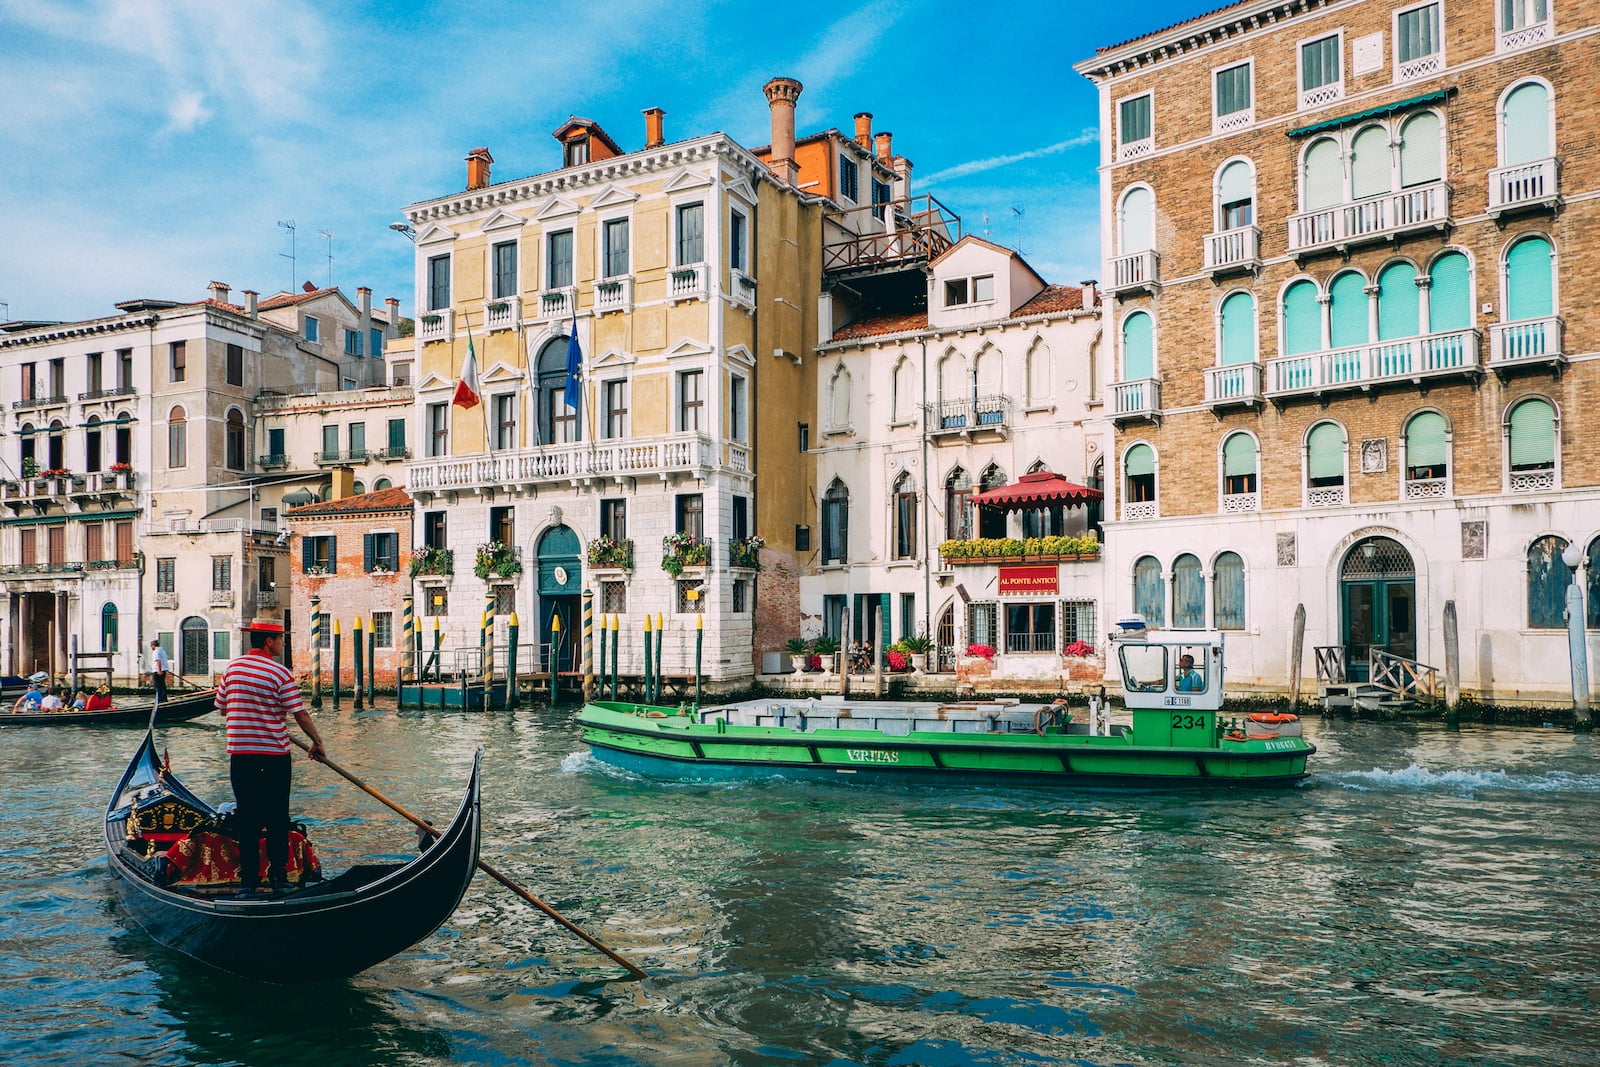 Grand Canal, Venice Italy